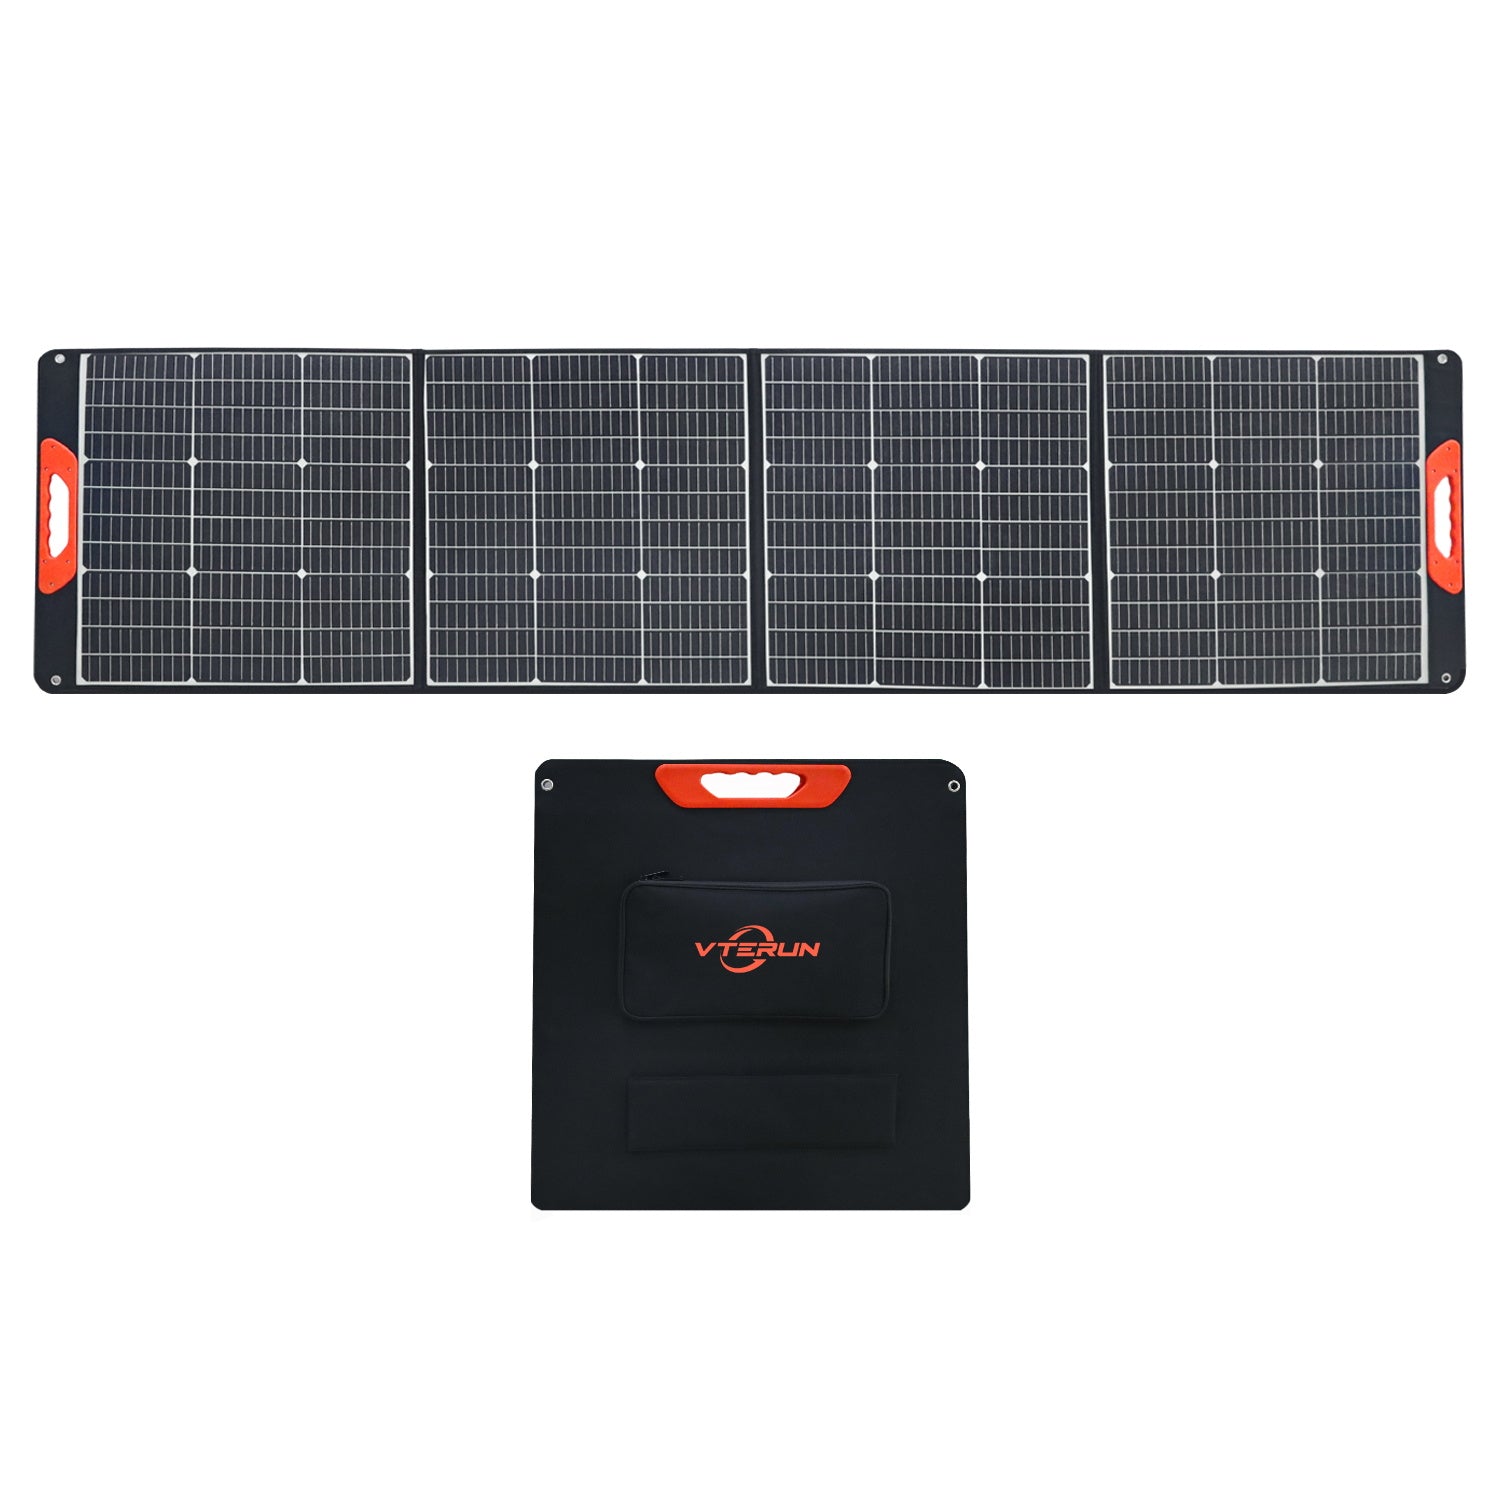 Vterun 220W Foldable Solar Panel